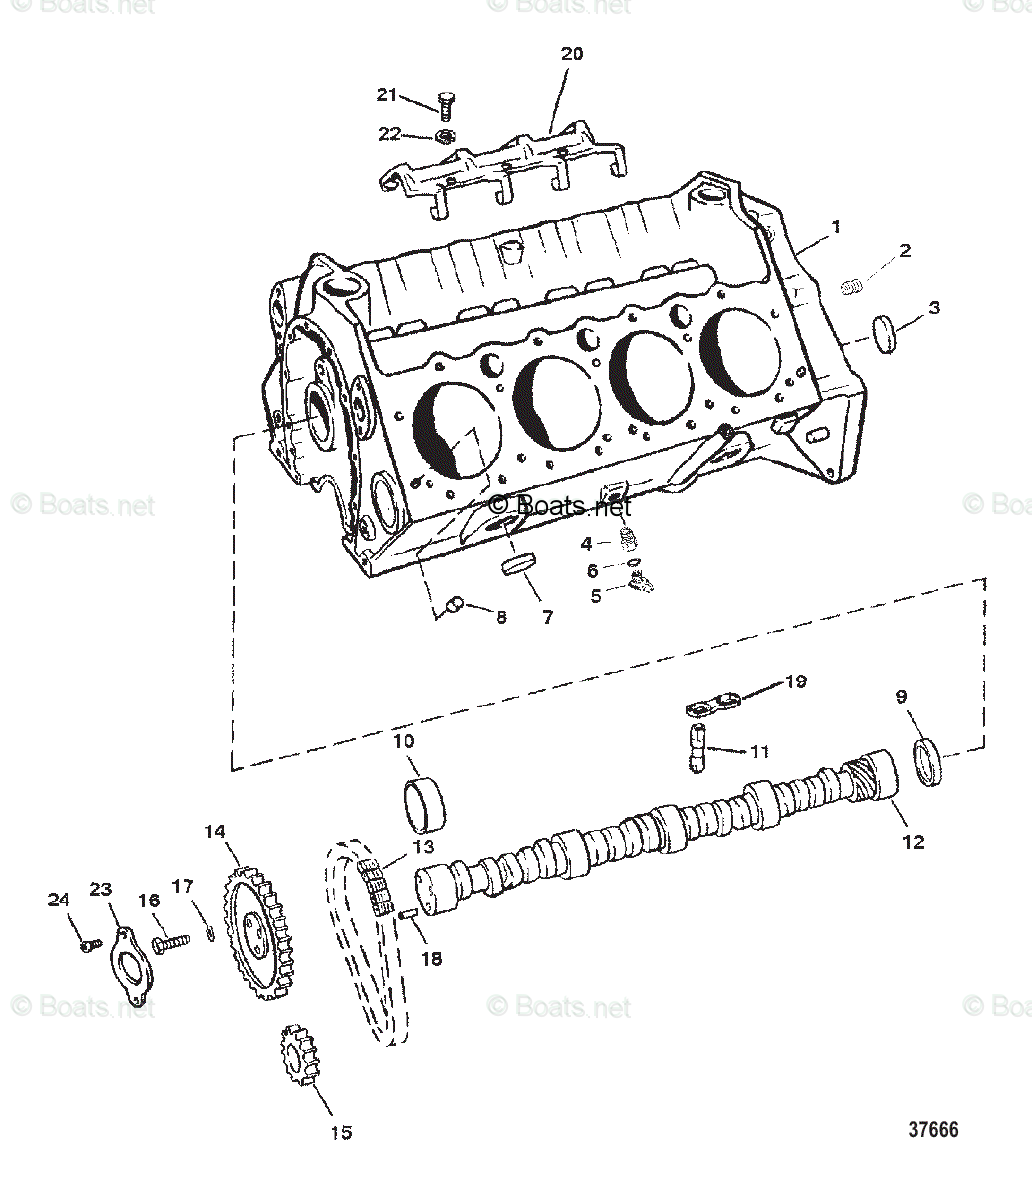 Mercury Mercruiser Sterndrive Parts By Size  U0026 Serial